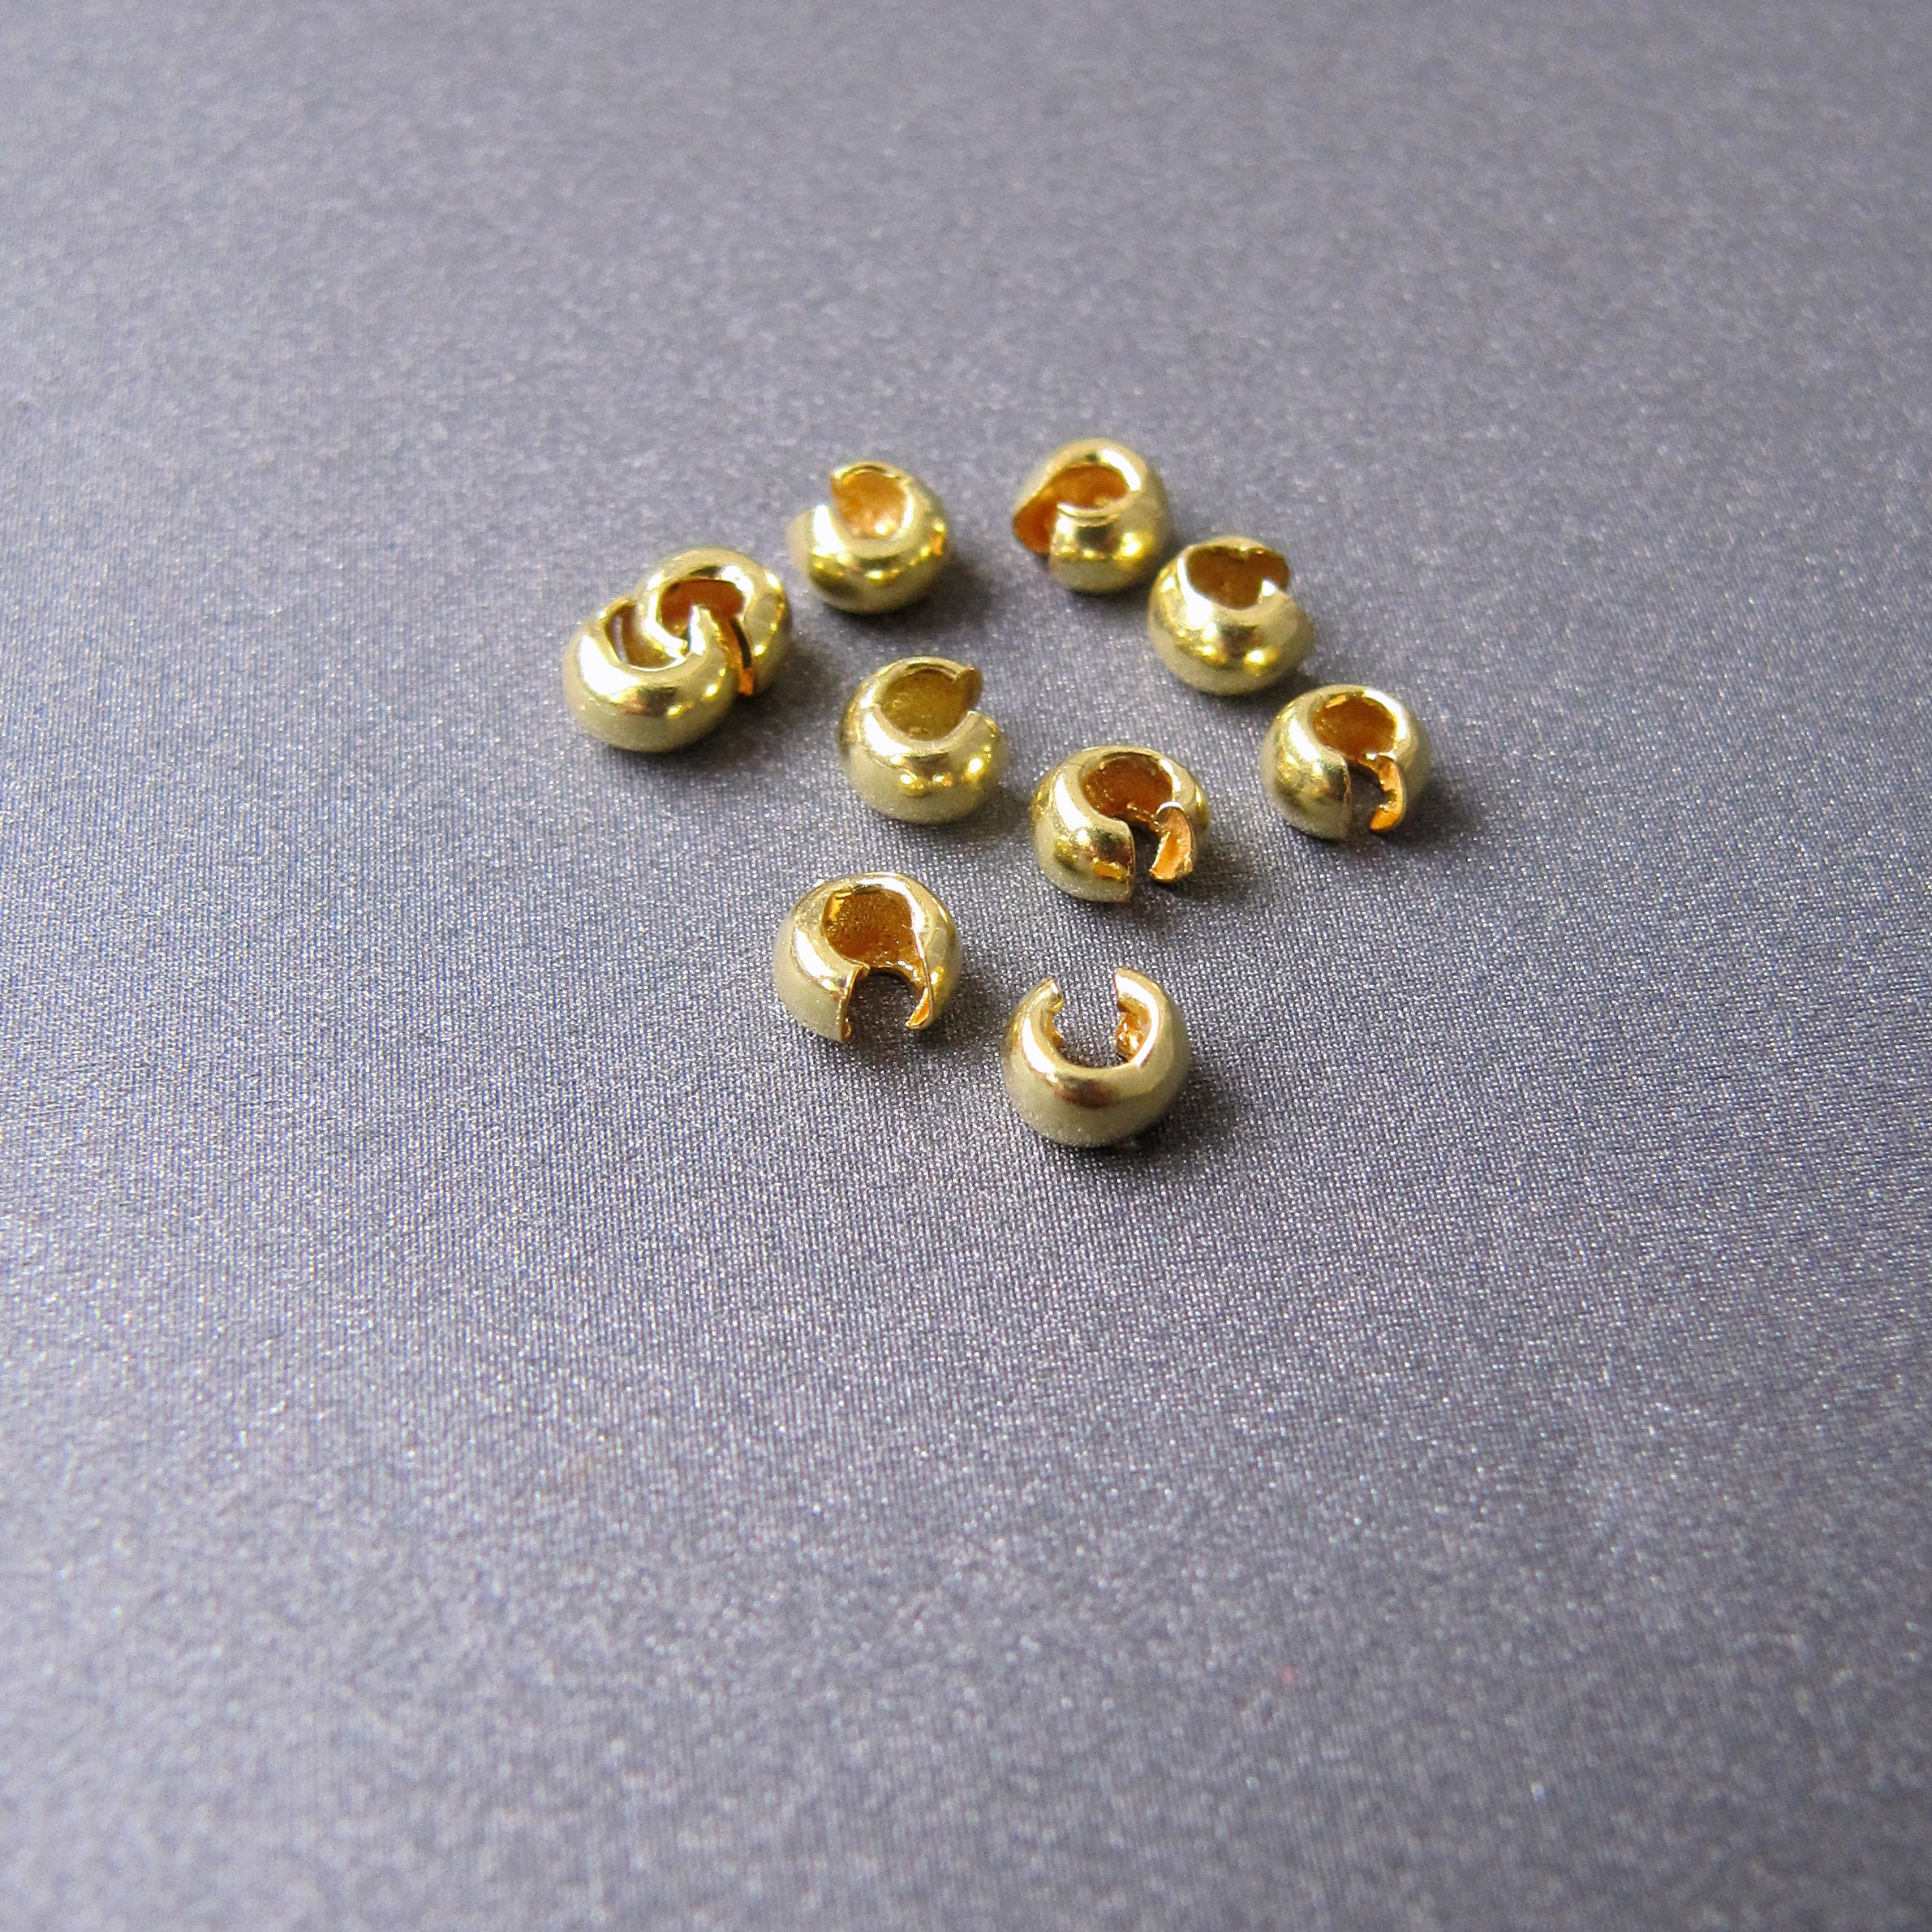 3mm Metal Crimp Bead Covers, 10ct. by Bead Landing™ 